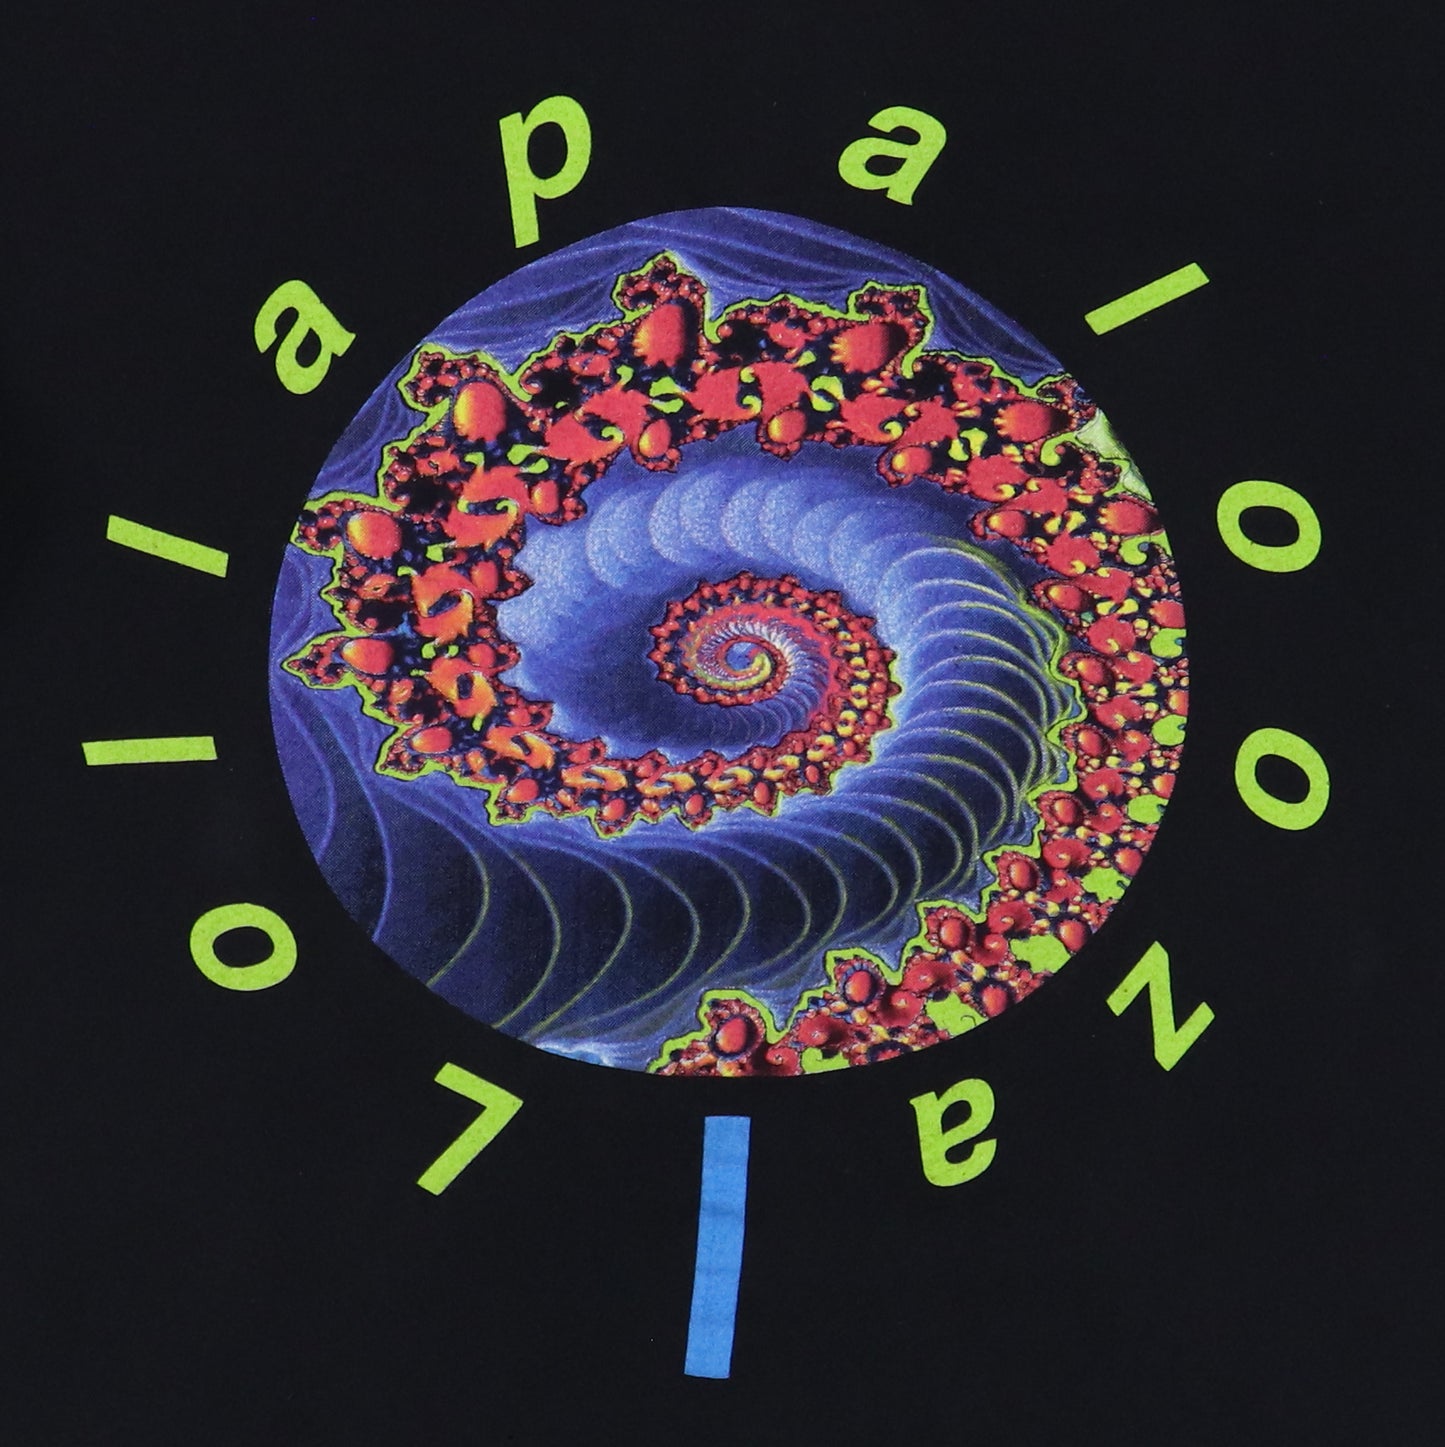 1991 Lollapalooza Tour Shirt